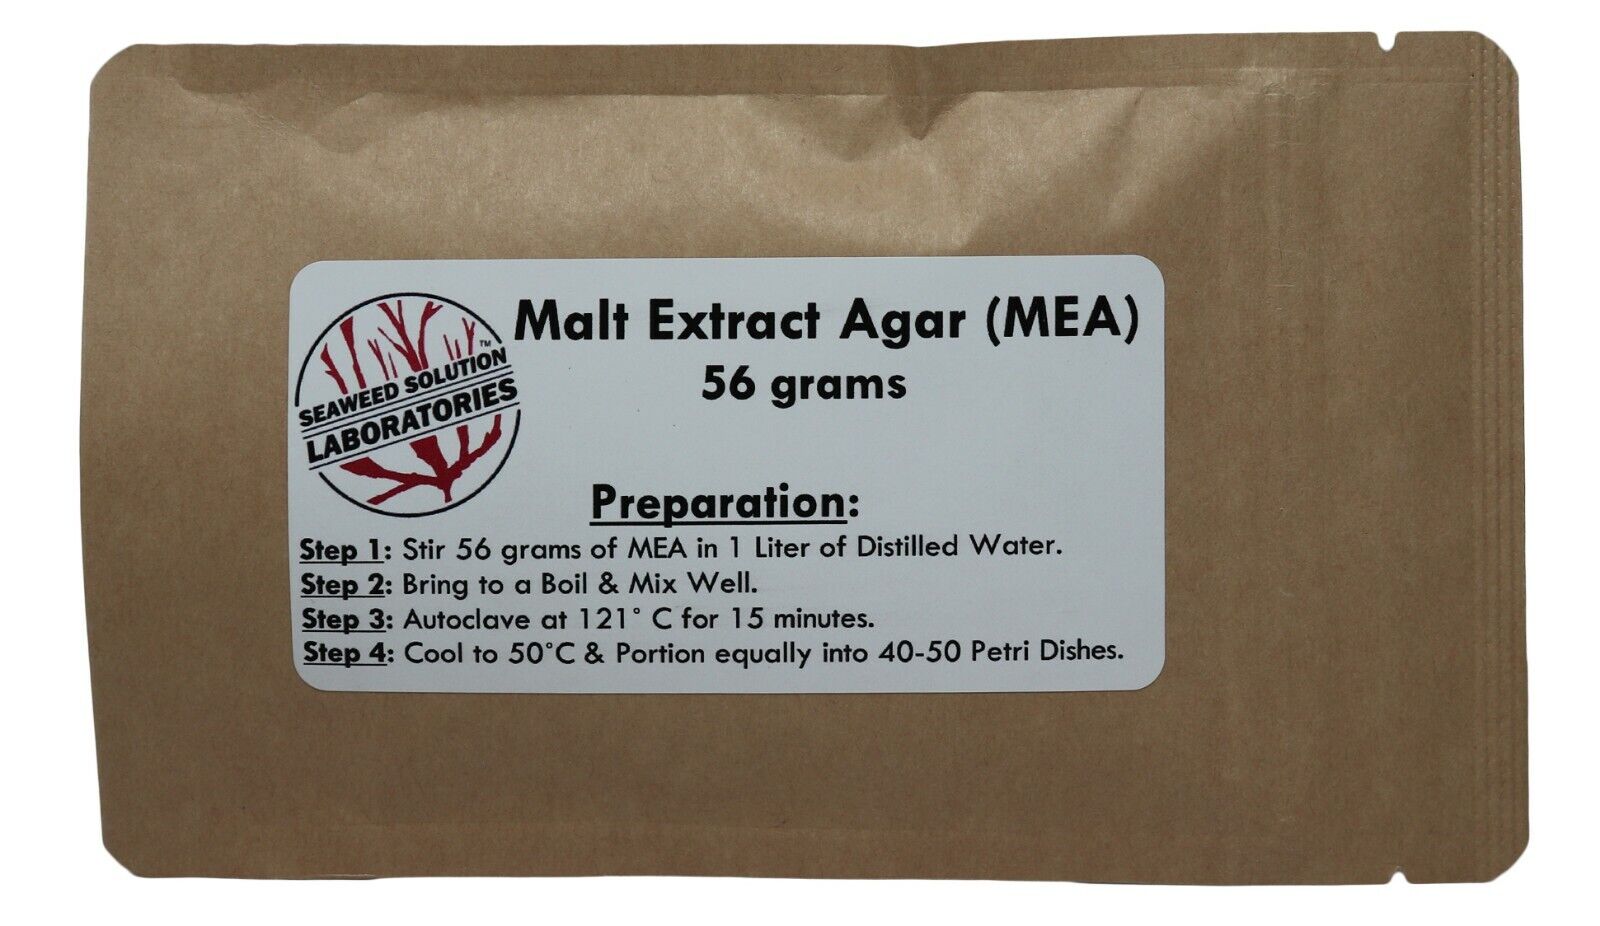 Malt Extract Agar (MEA) 56 grams - Great For Growing Mushrooms! - Yields 1 Liter